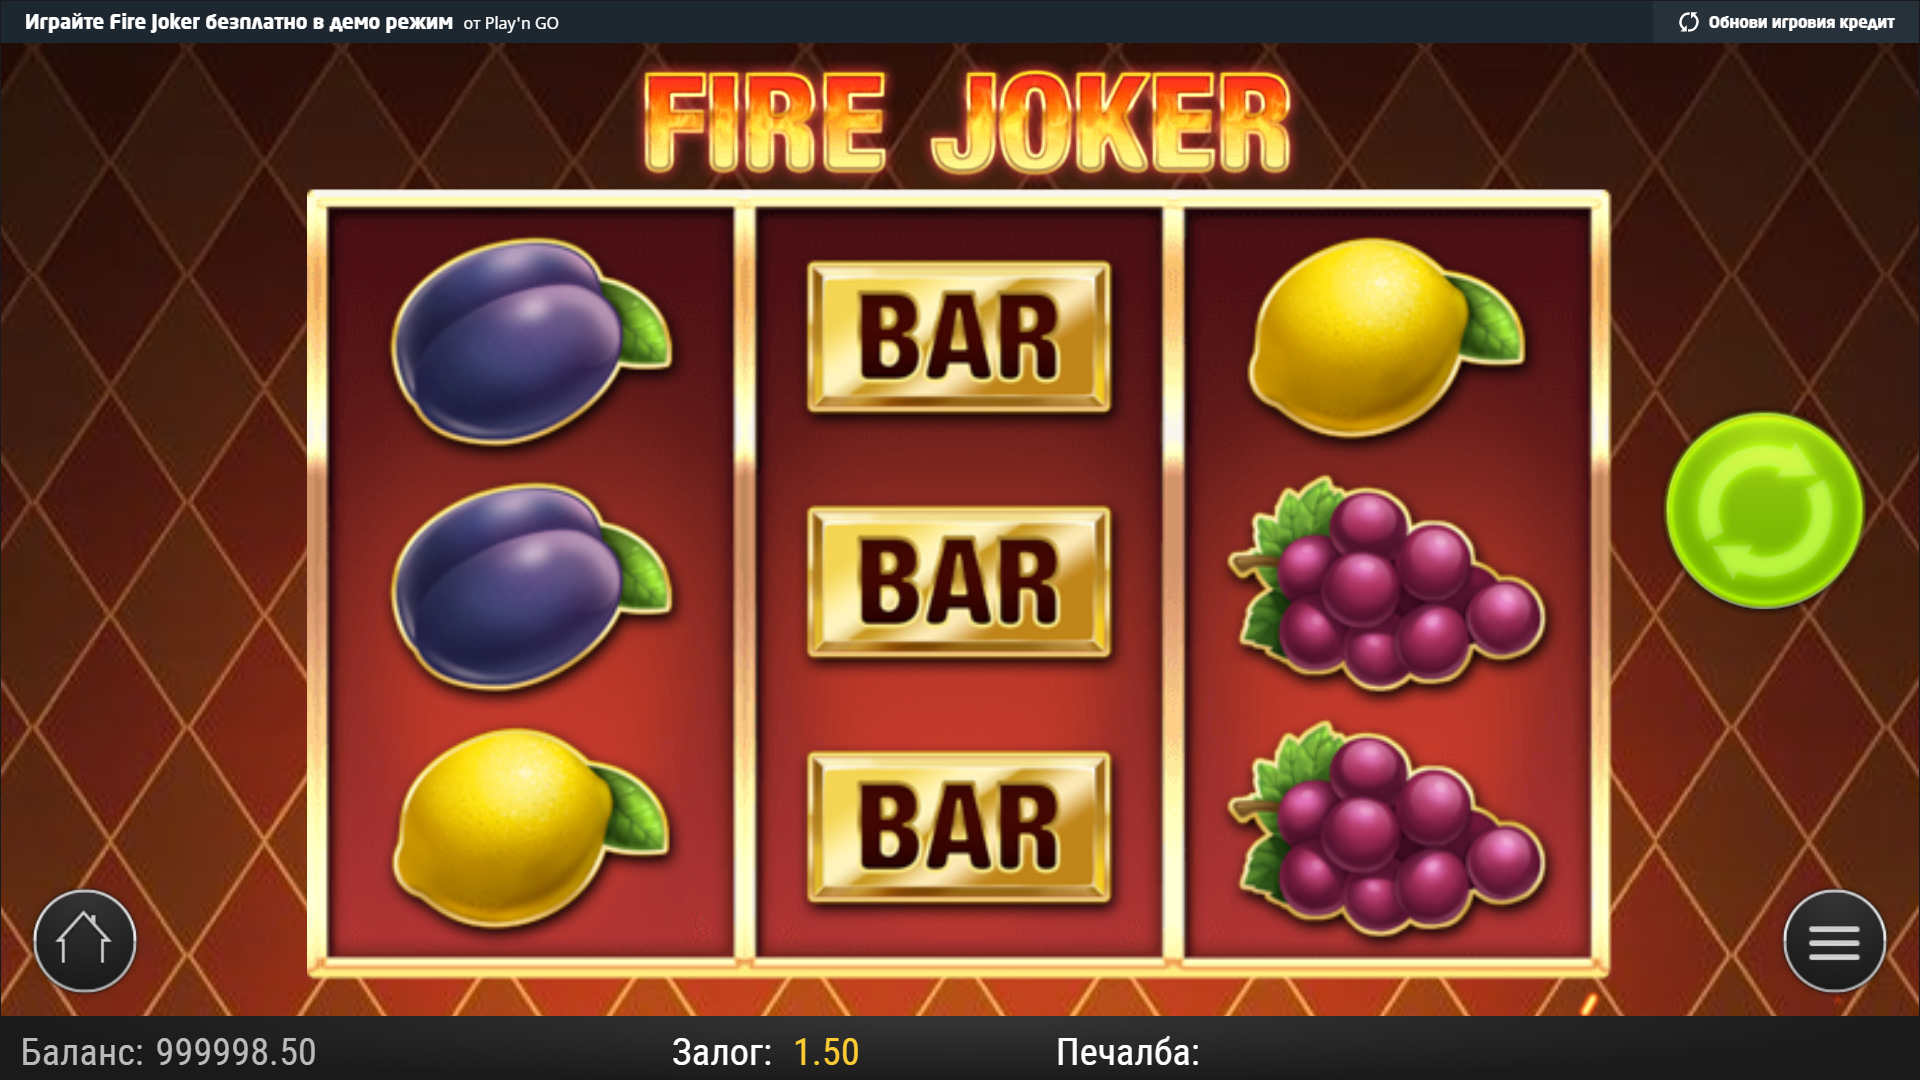 Demo de la slot Fire Joker.